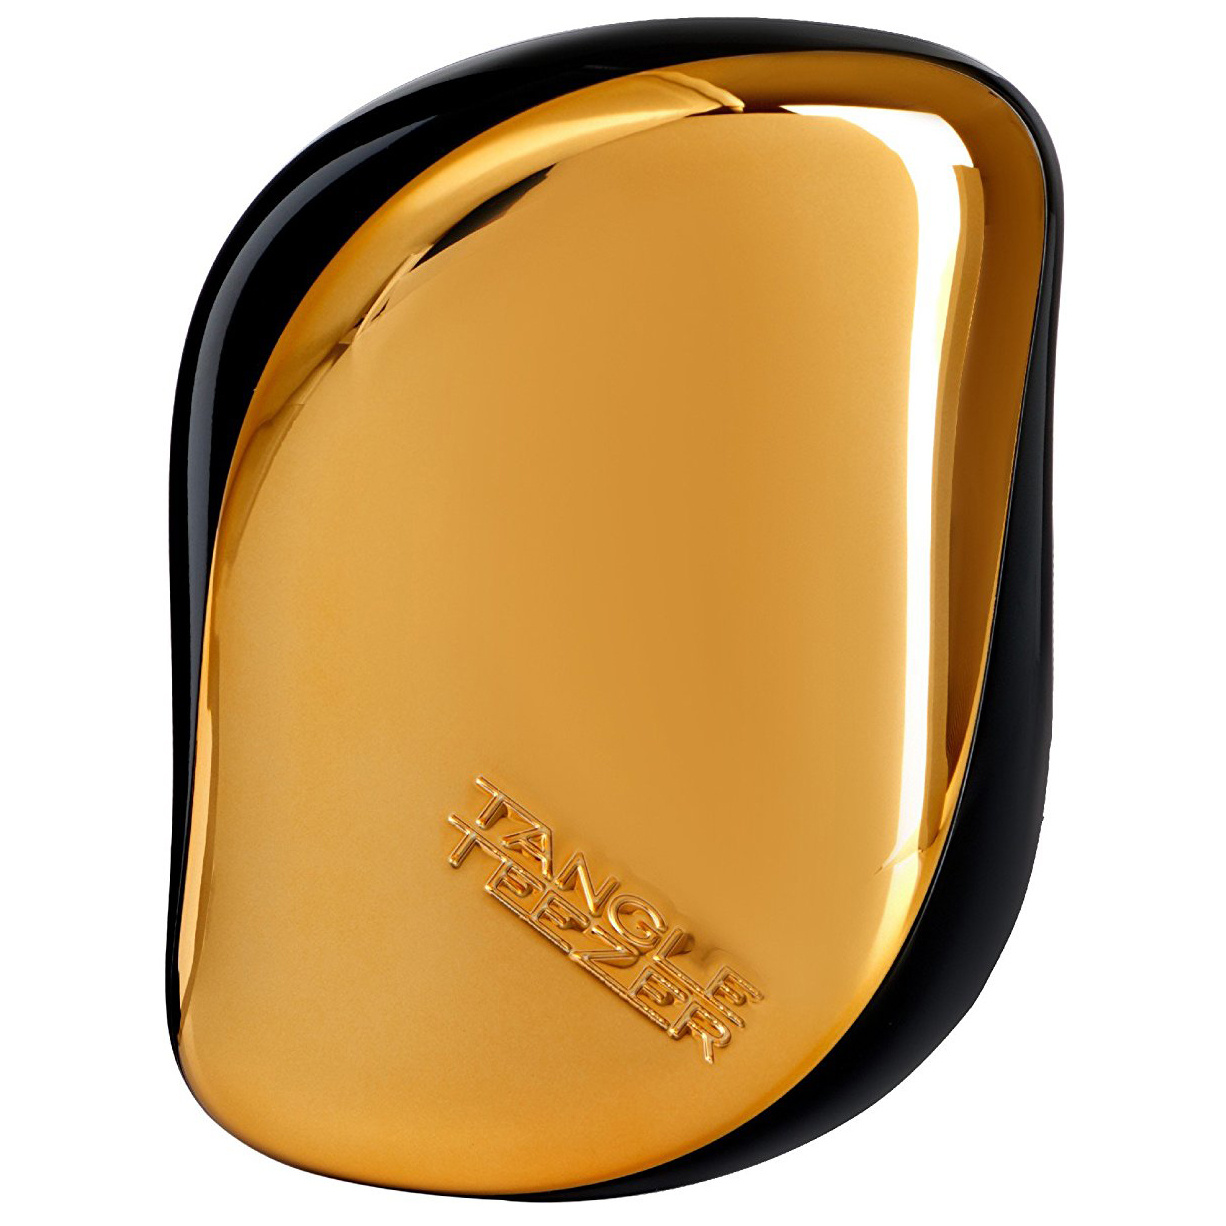 Расческа Tangle Teezer Compact Styler Bronze Chrome tangle teezer расческа compact styler pearlescent matte